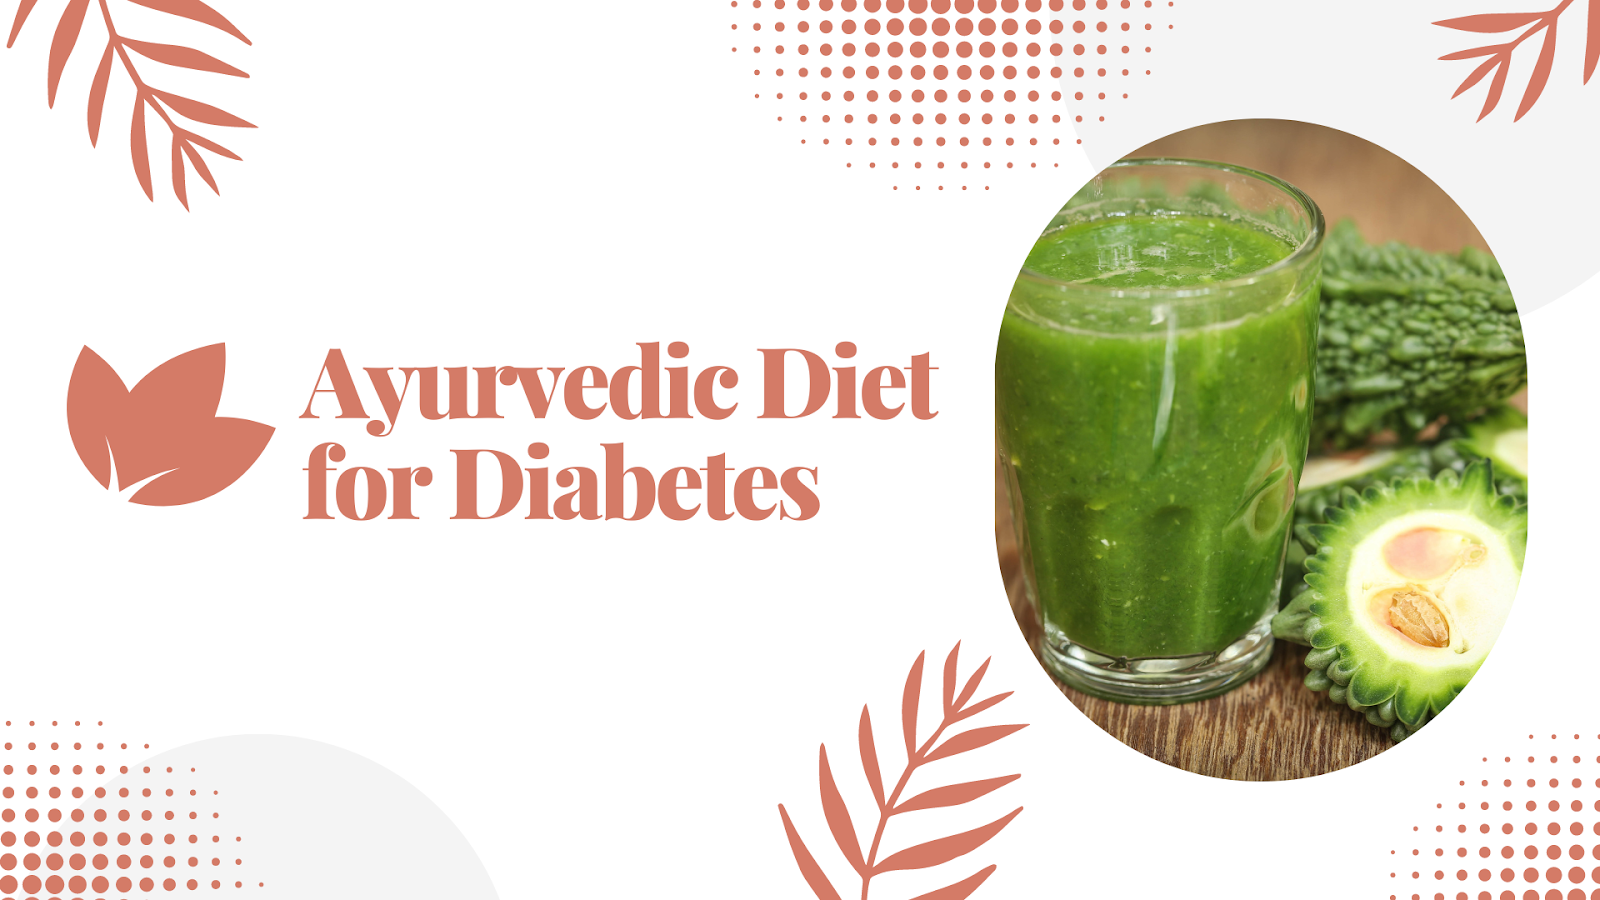 Ayurvedic diet for diabetes